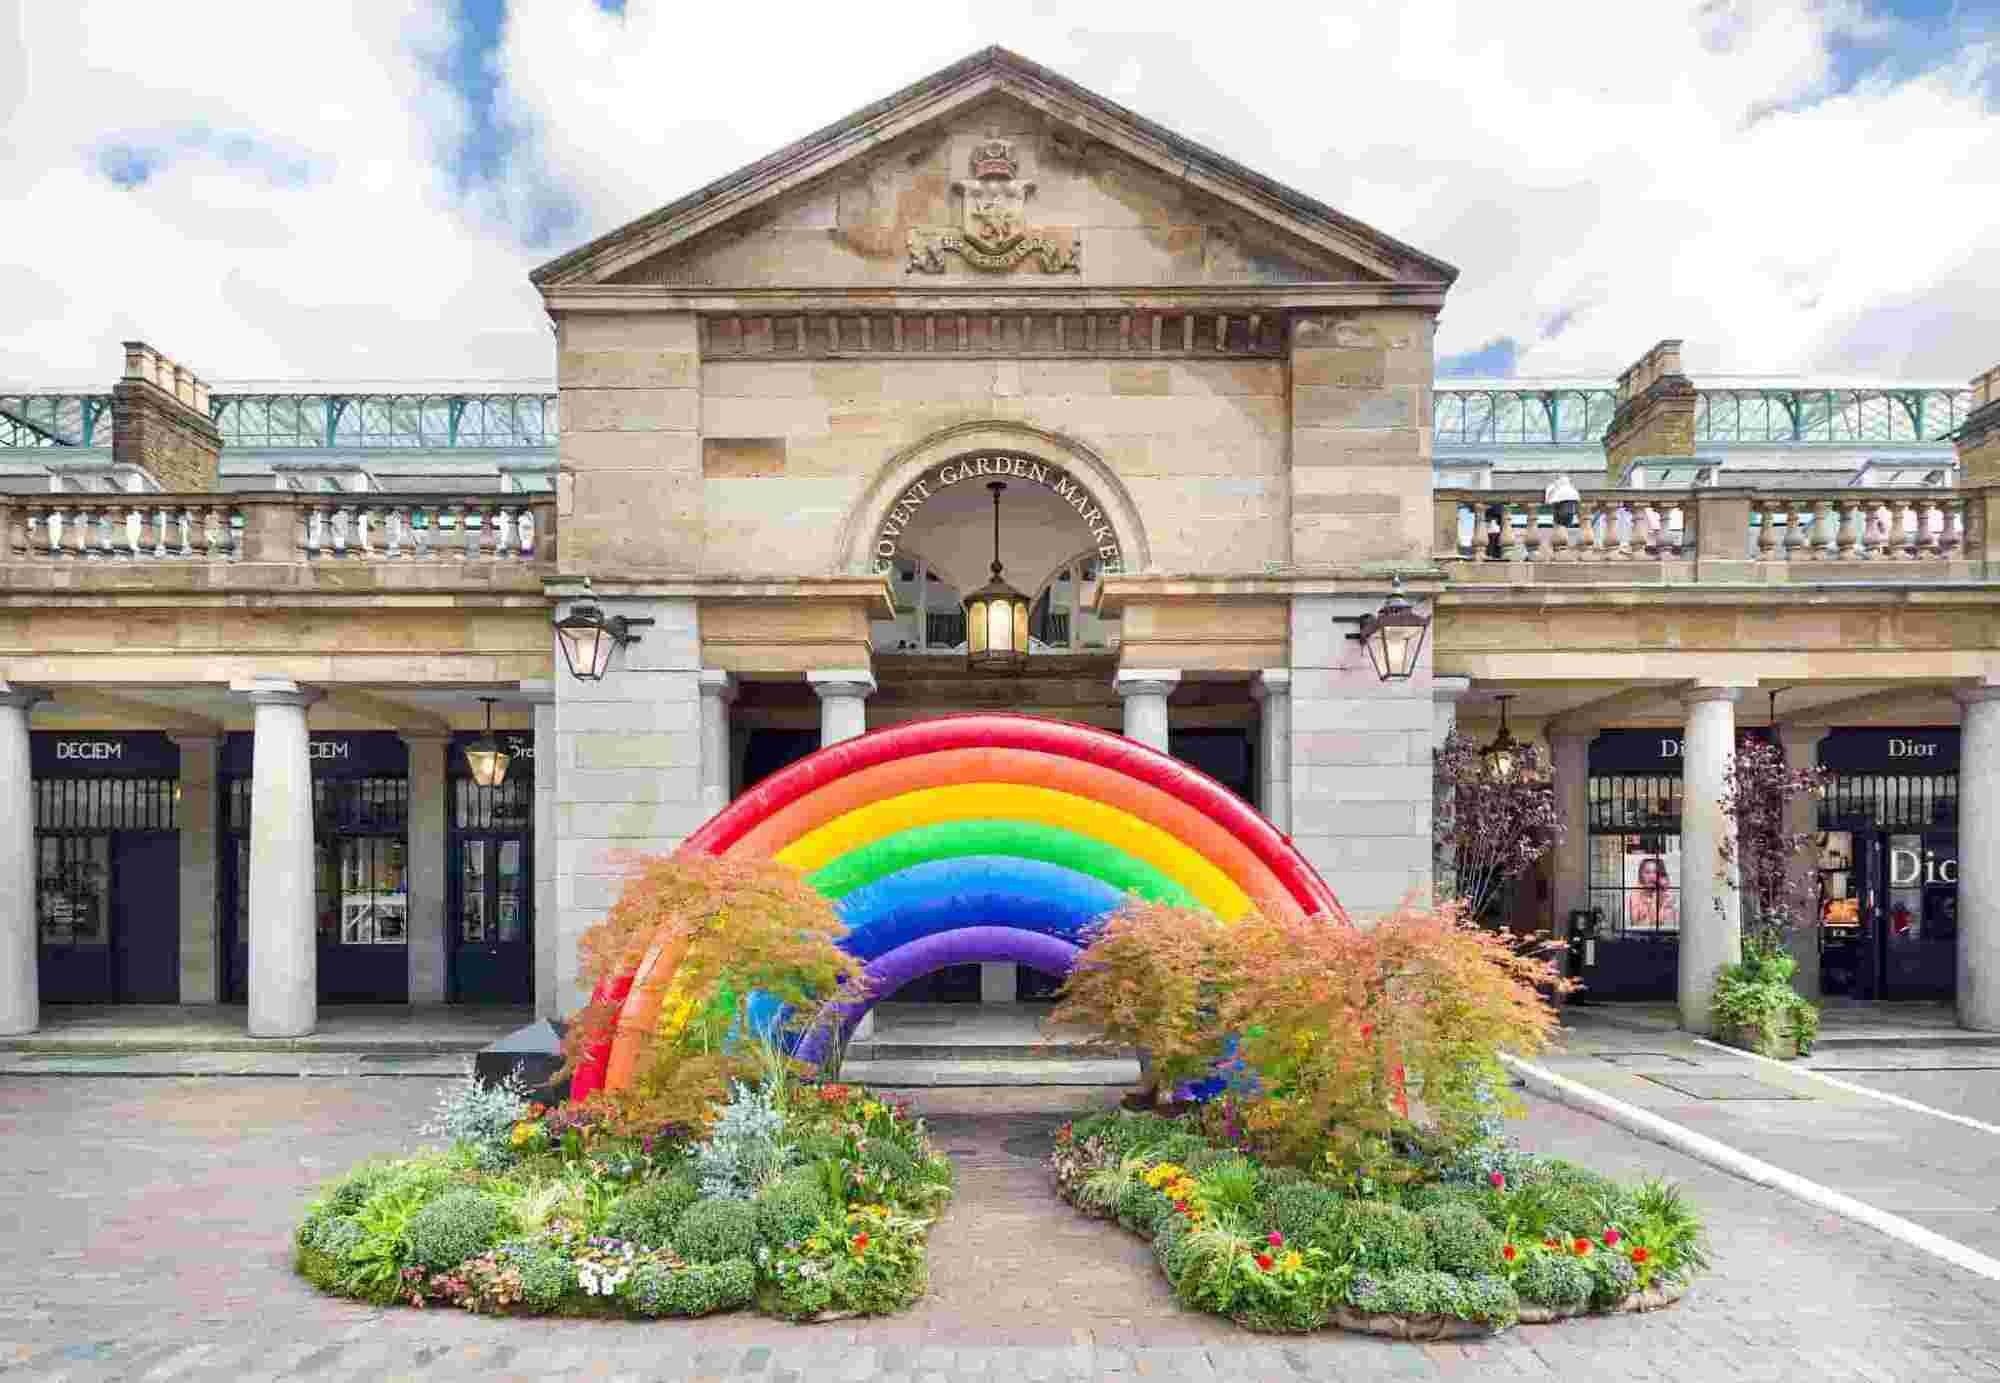 Giant rainbow in Covent Garden